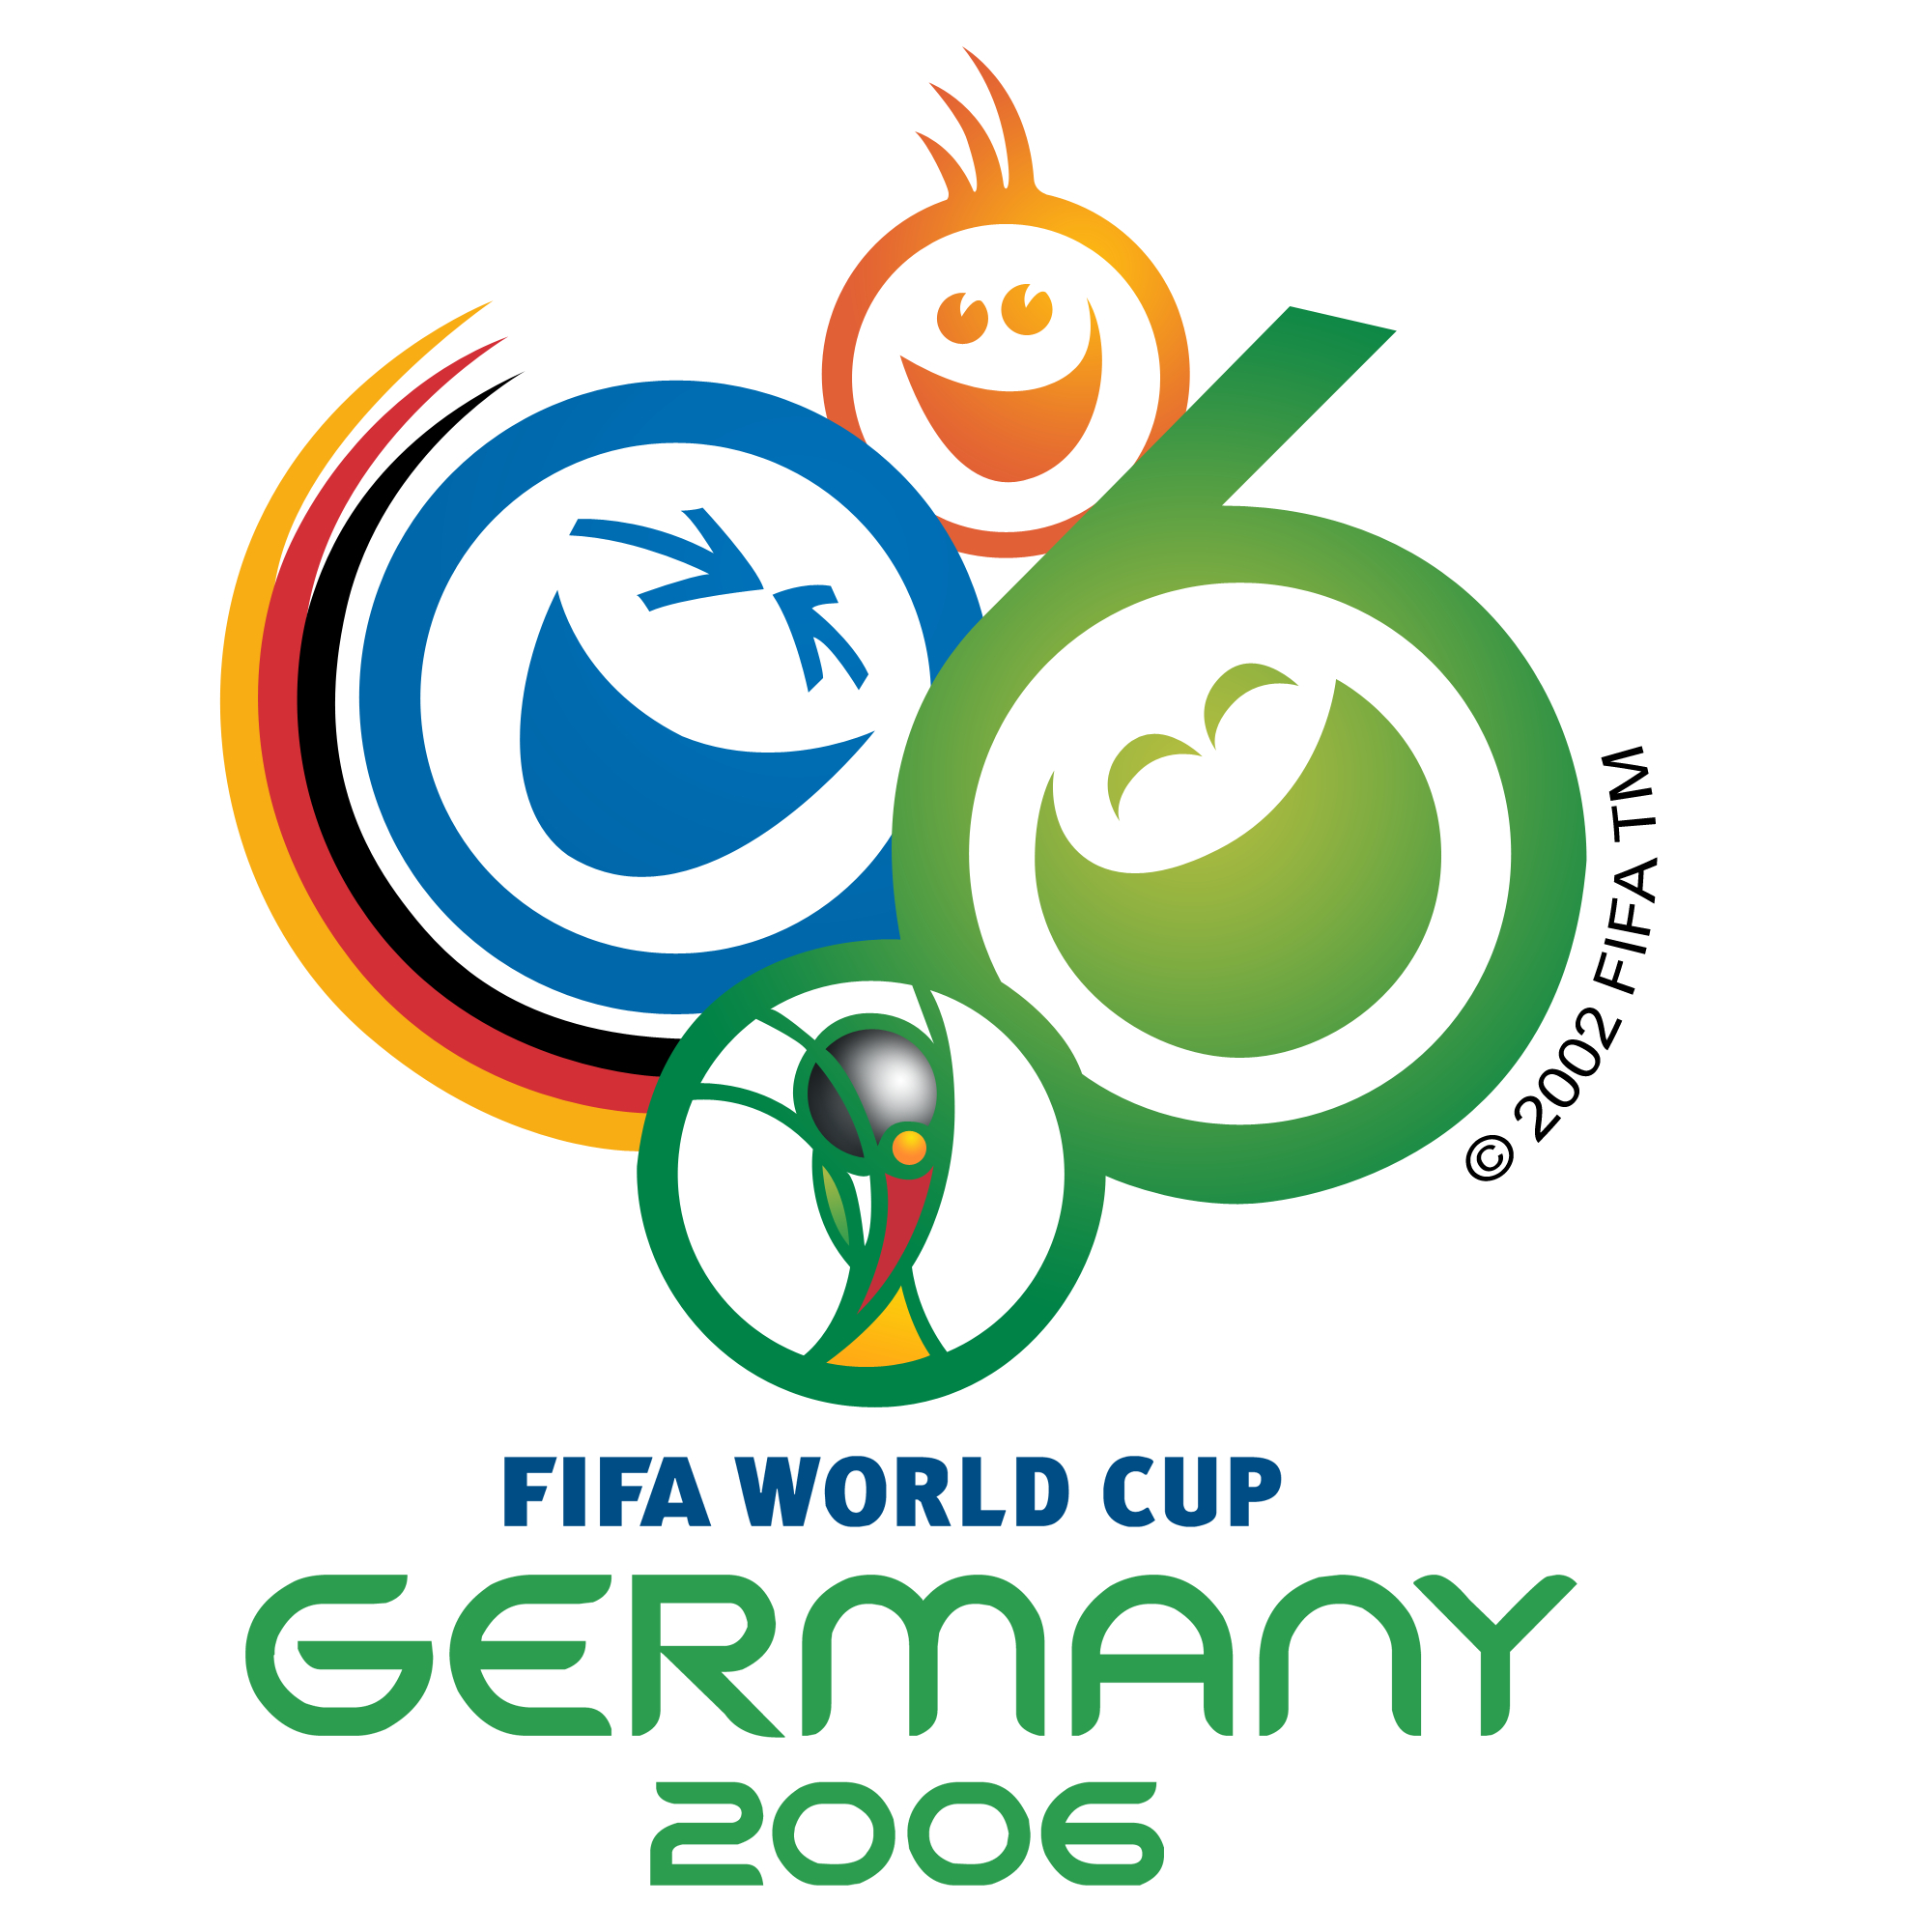 чемпионат мира по футболу, логотип, бренд, фирменный стиль, FIFA World Cup, logo, brand, Германия 2006